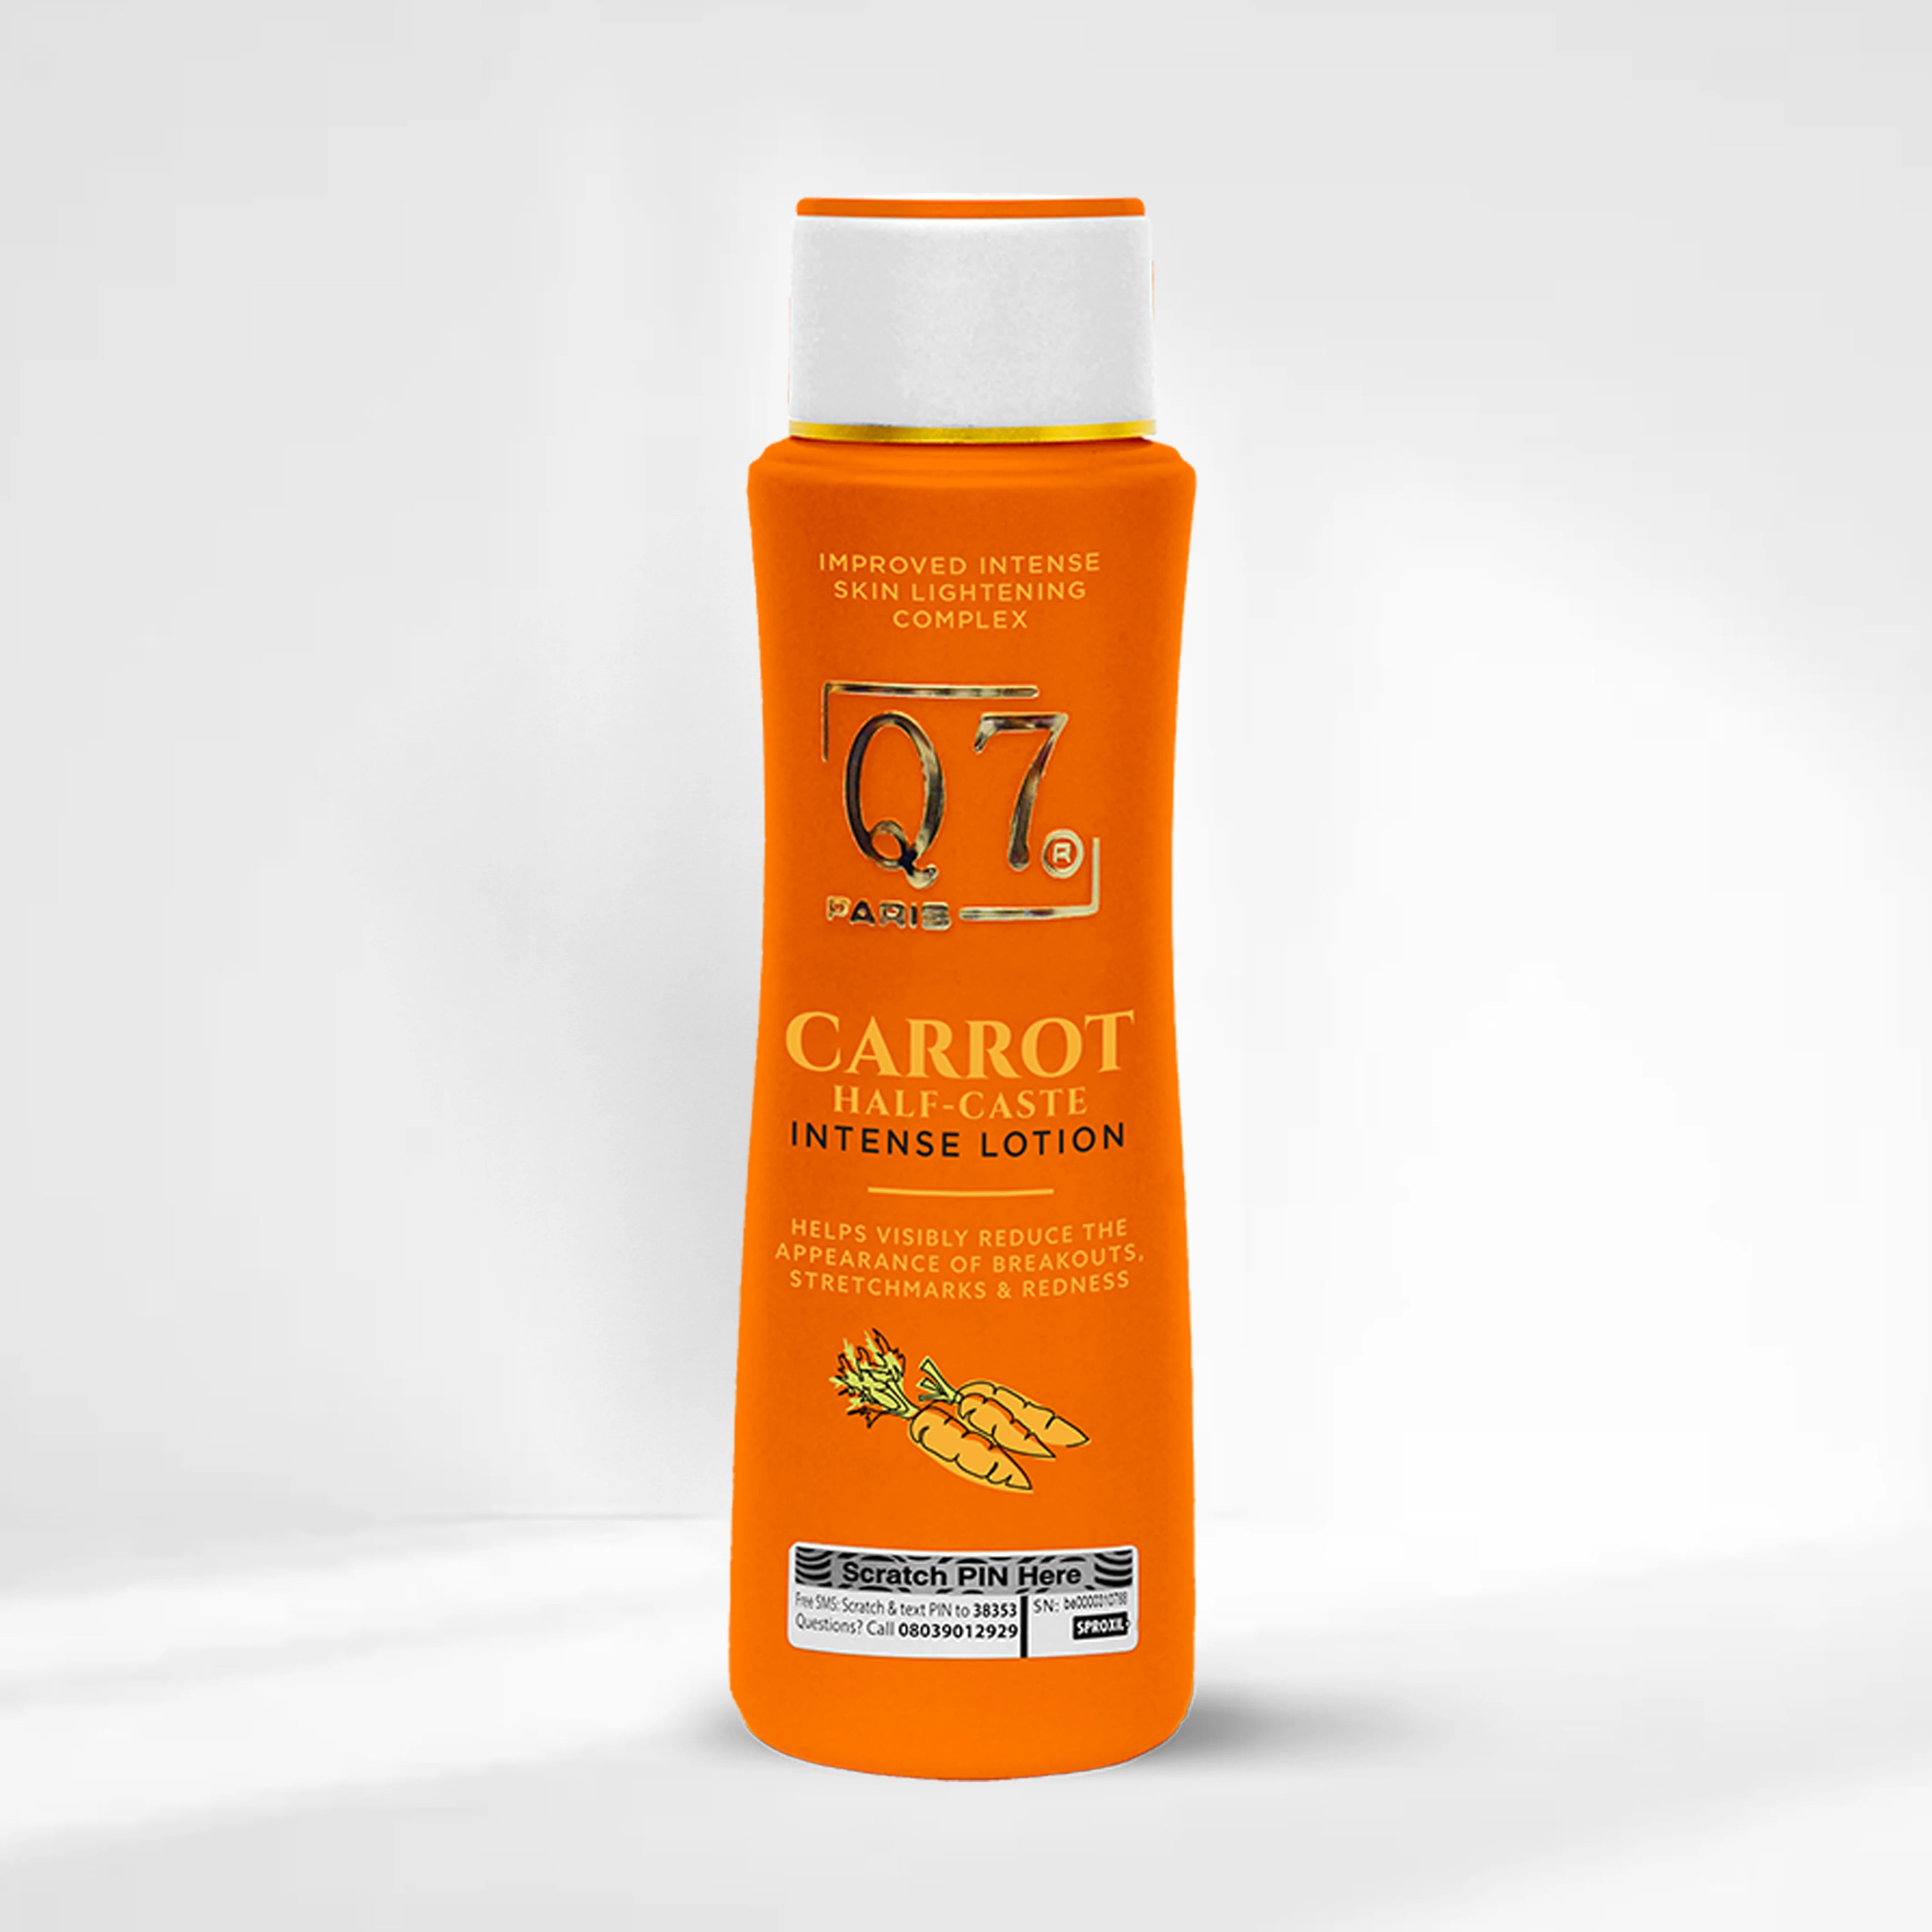 Q7Paris Carrot HCaste Intense Skin Lightening Complex Lotion - 300ml